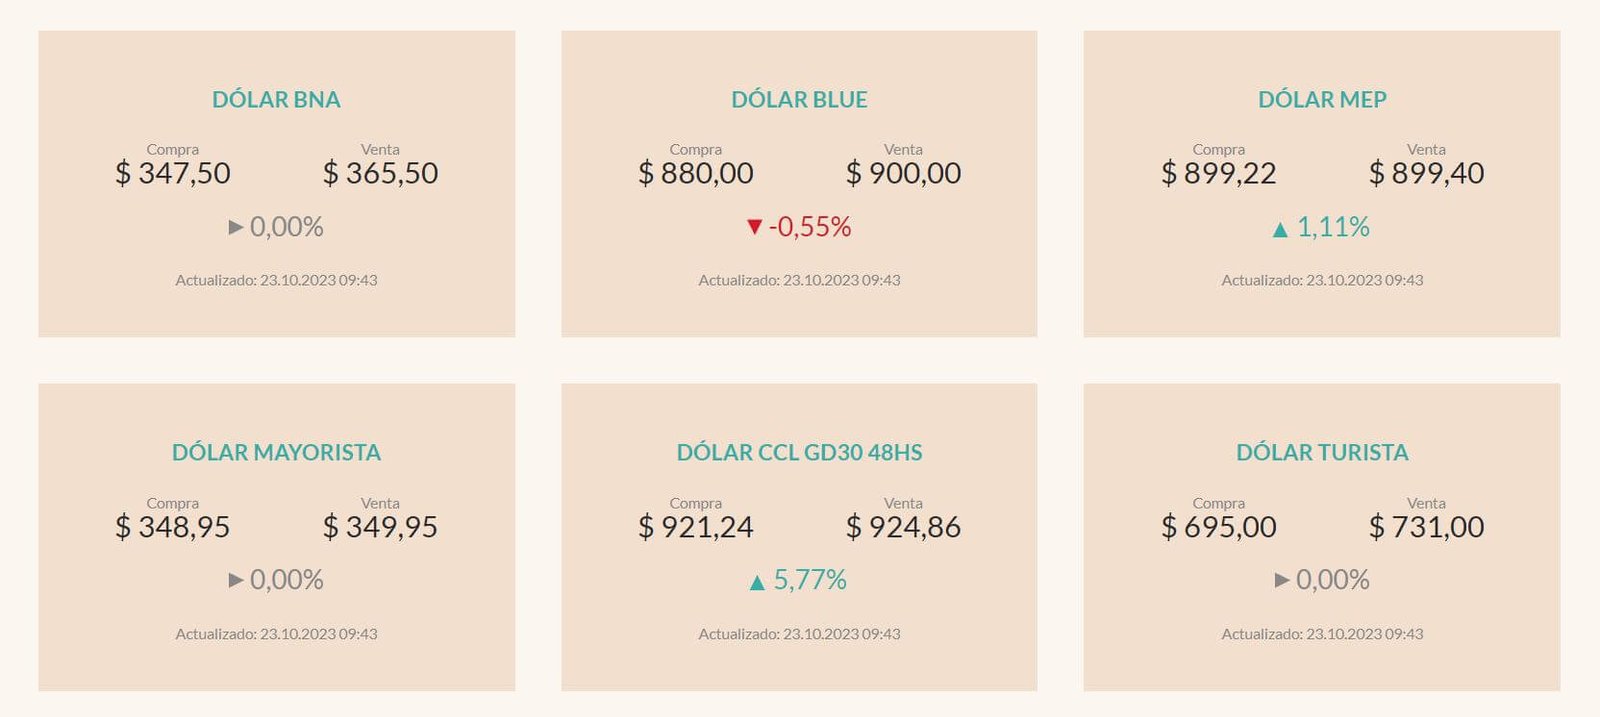 Different US dollar exchange rates in Argentina